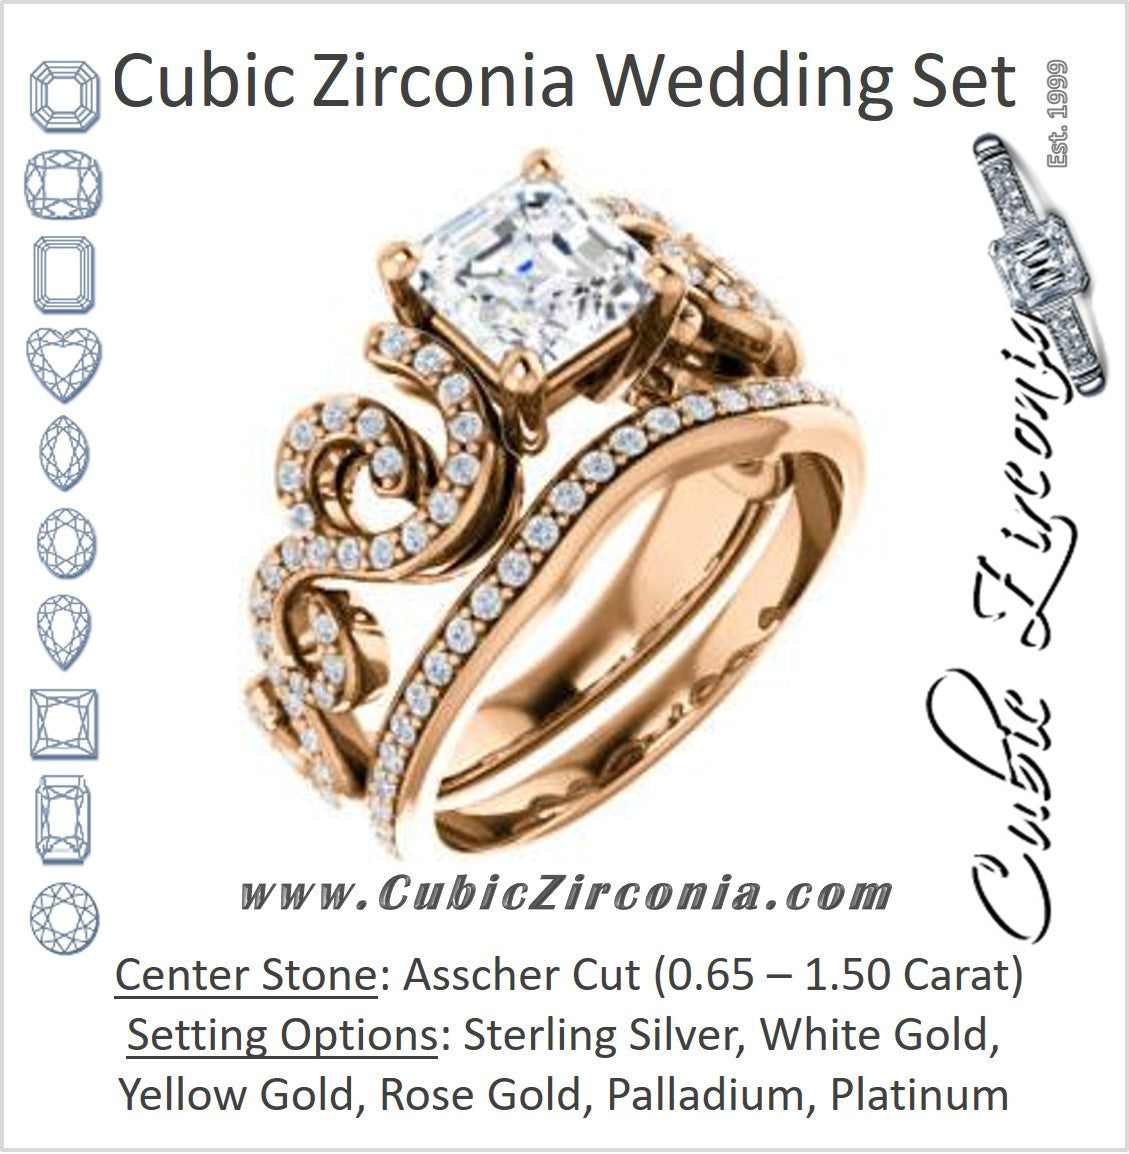 CZ Wedding Set, featuring The Carla engagement ring (Customizable Asscher Cut Split-Band Curves)